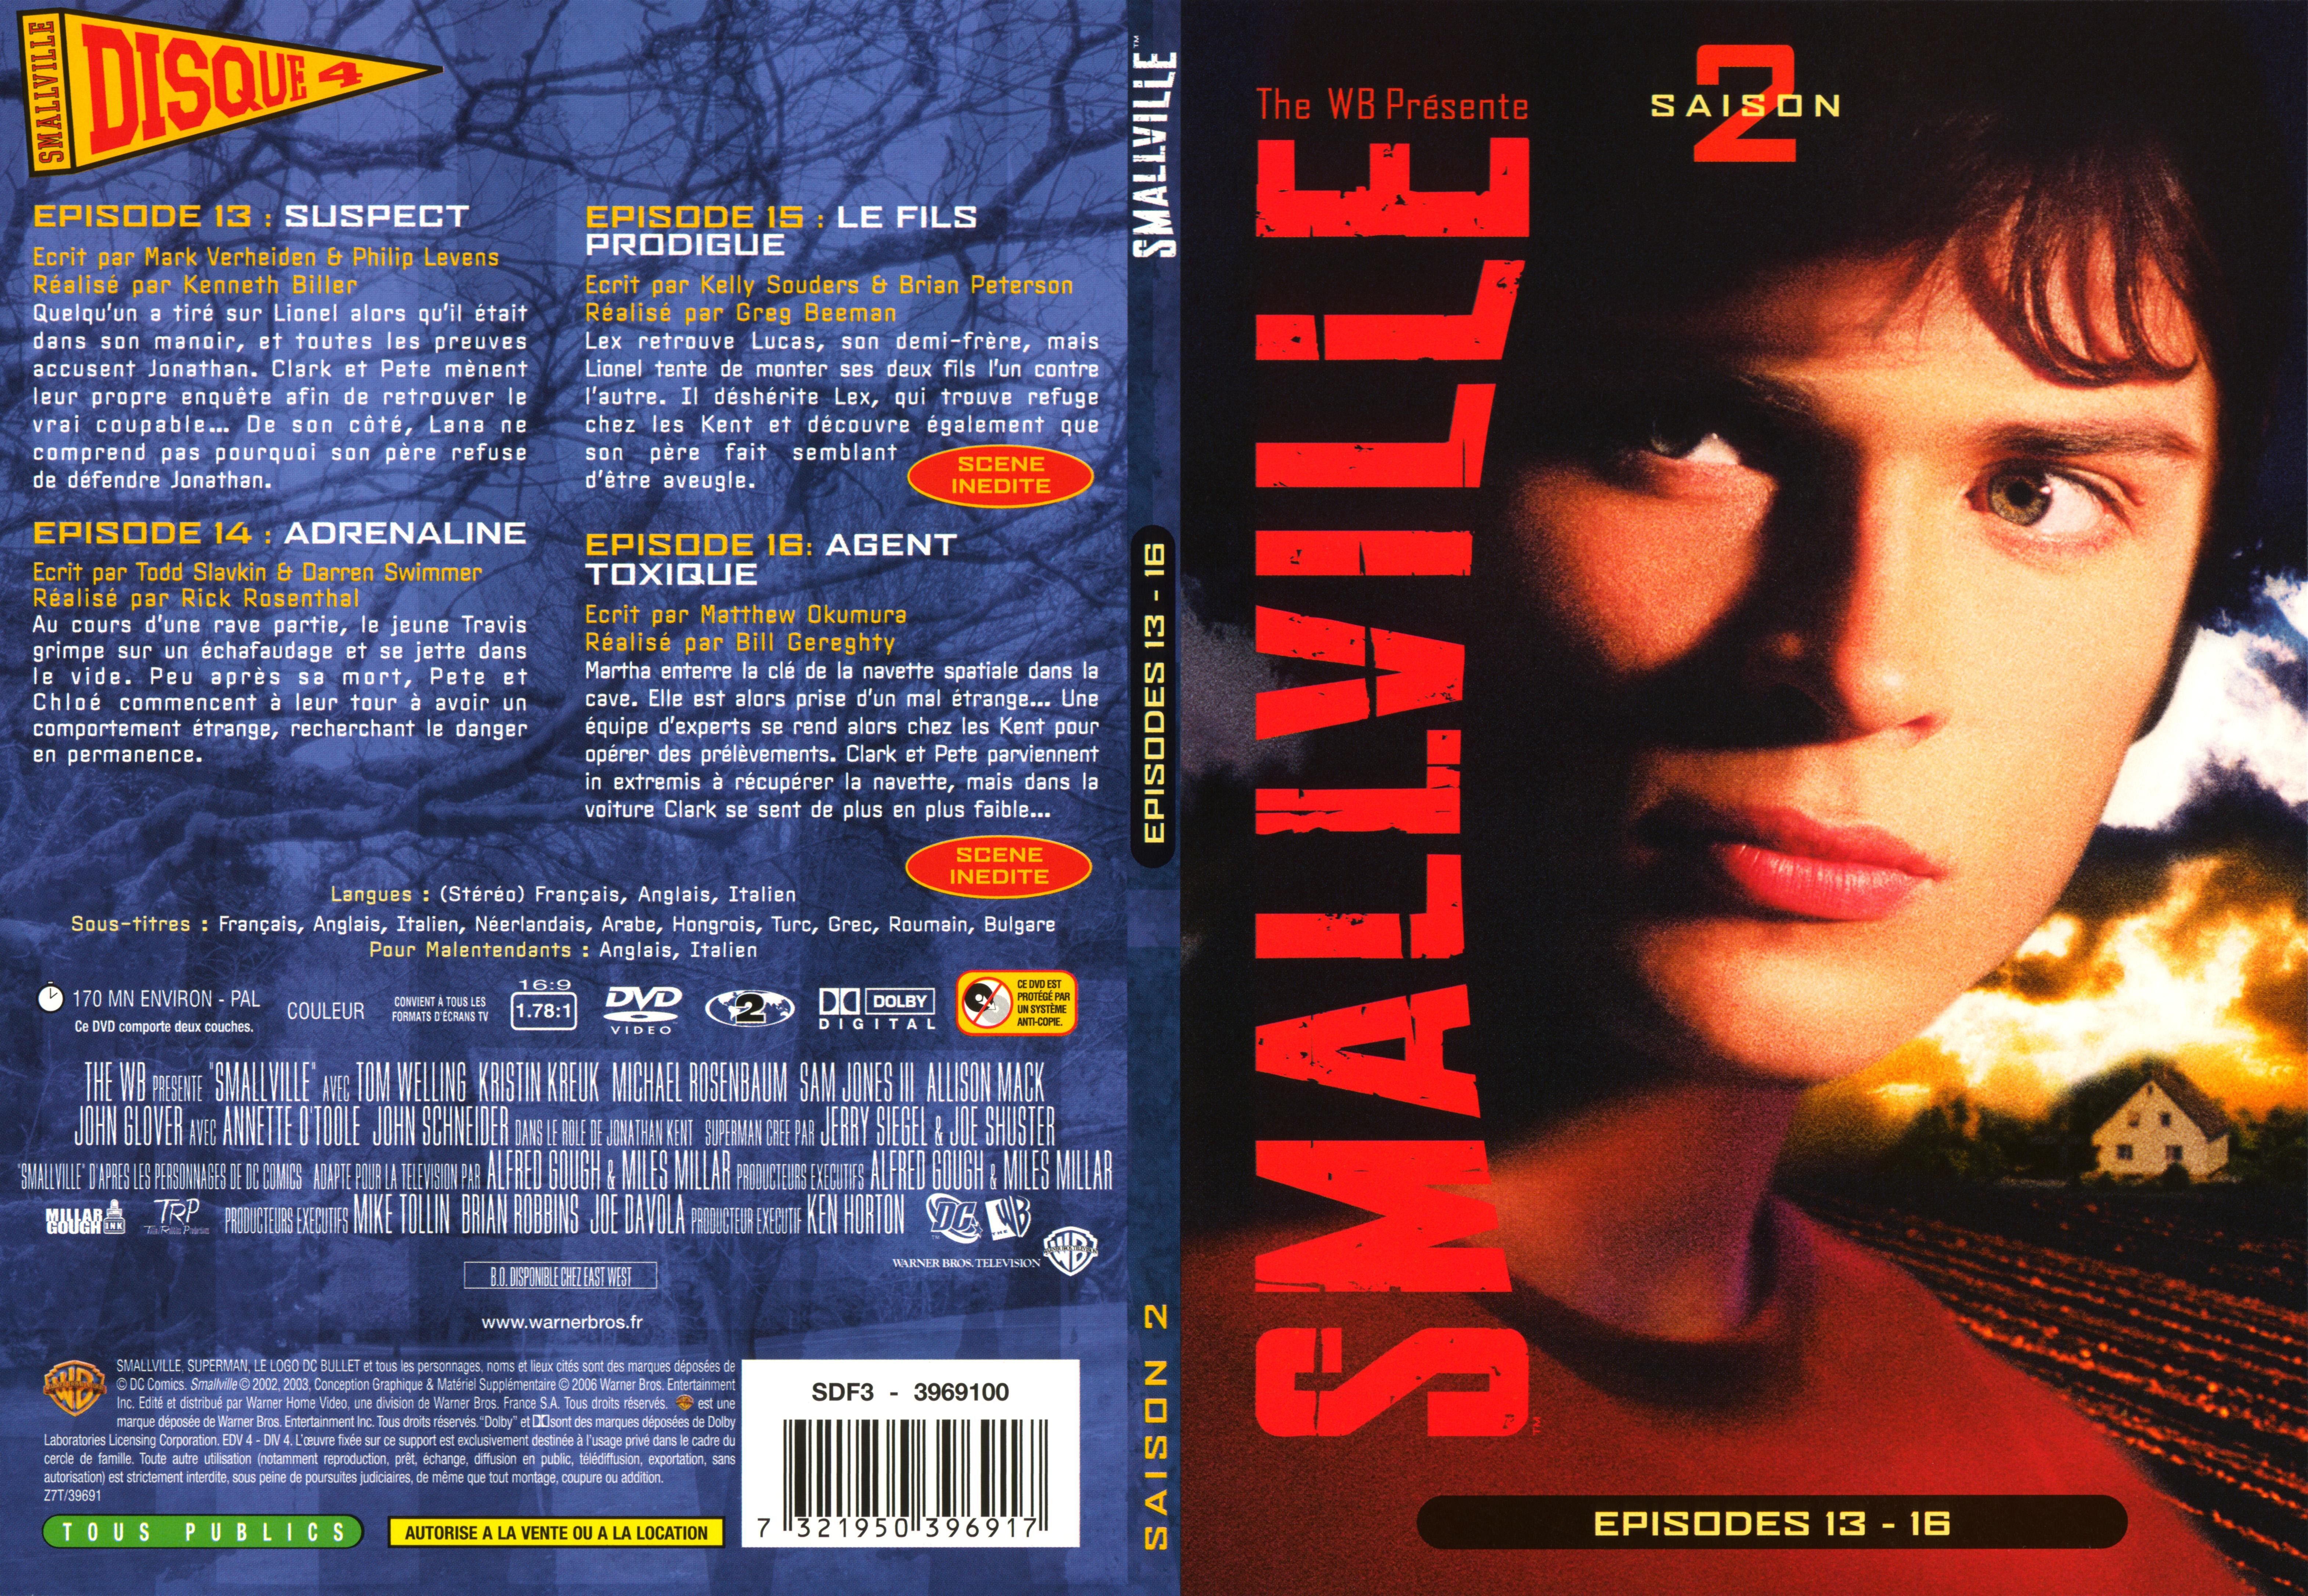 Jaquette DVD Smallville saison 2 DVD 4